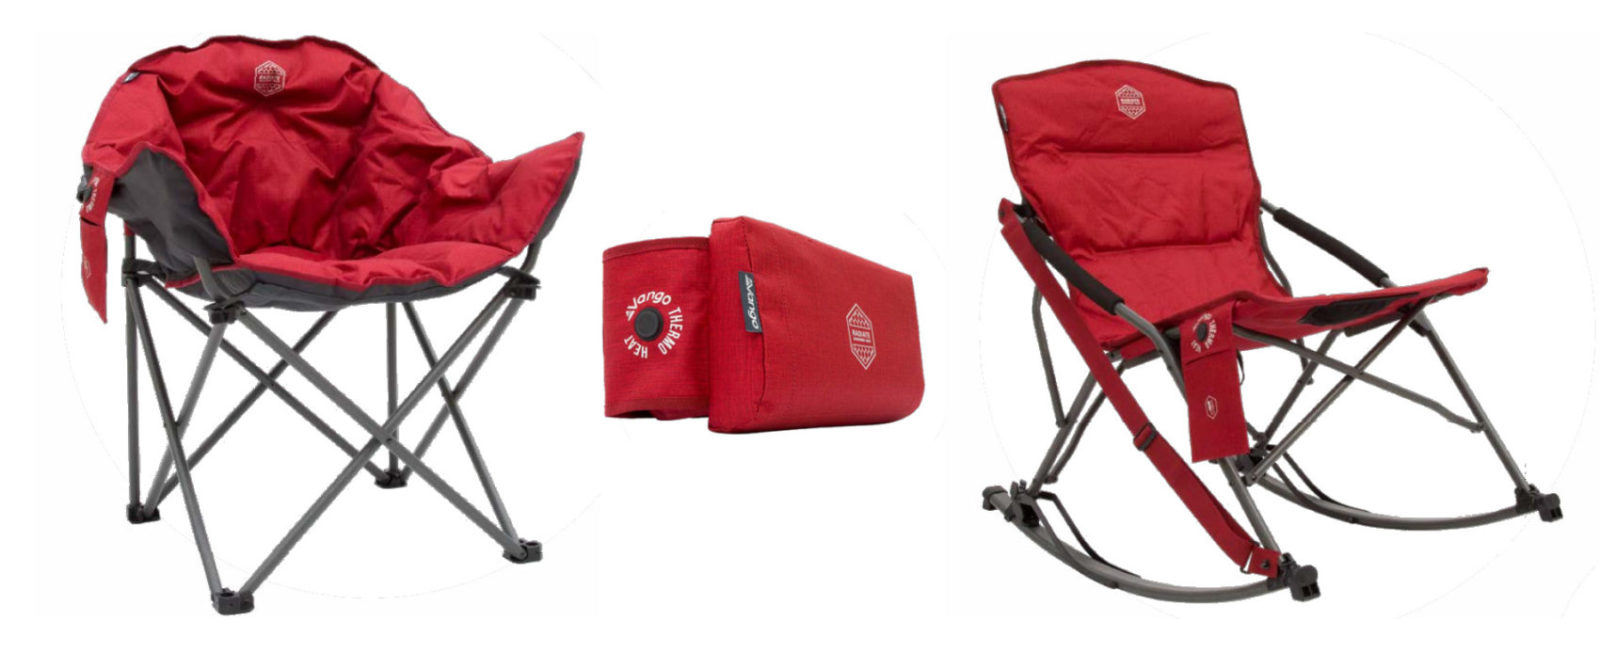 The new expanded Vango Radiate chair range